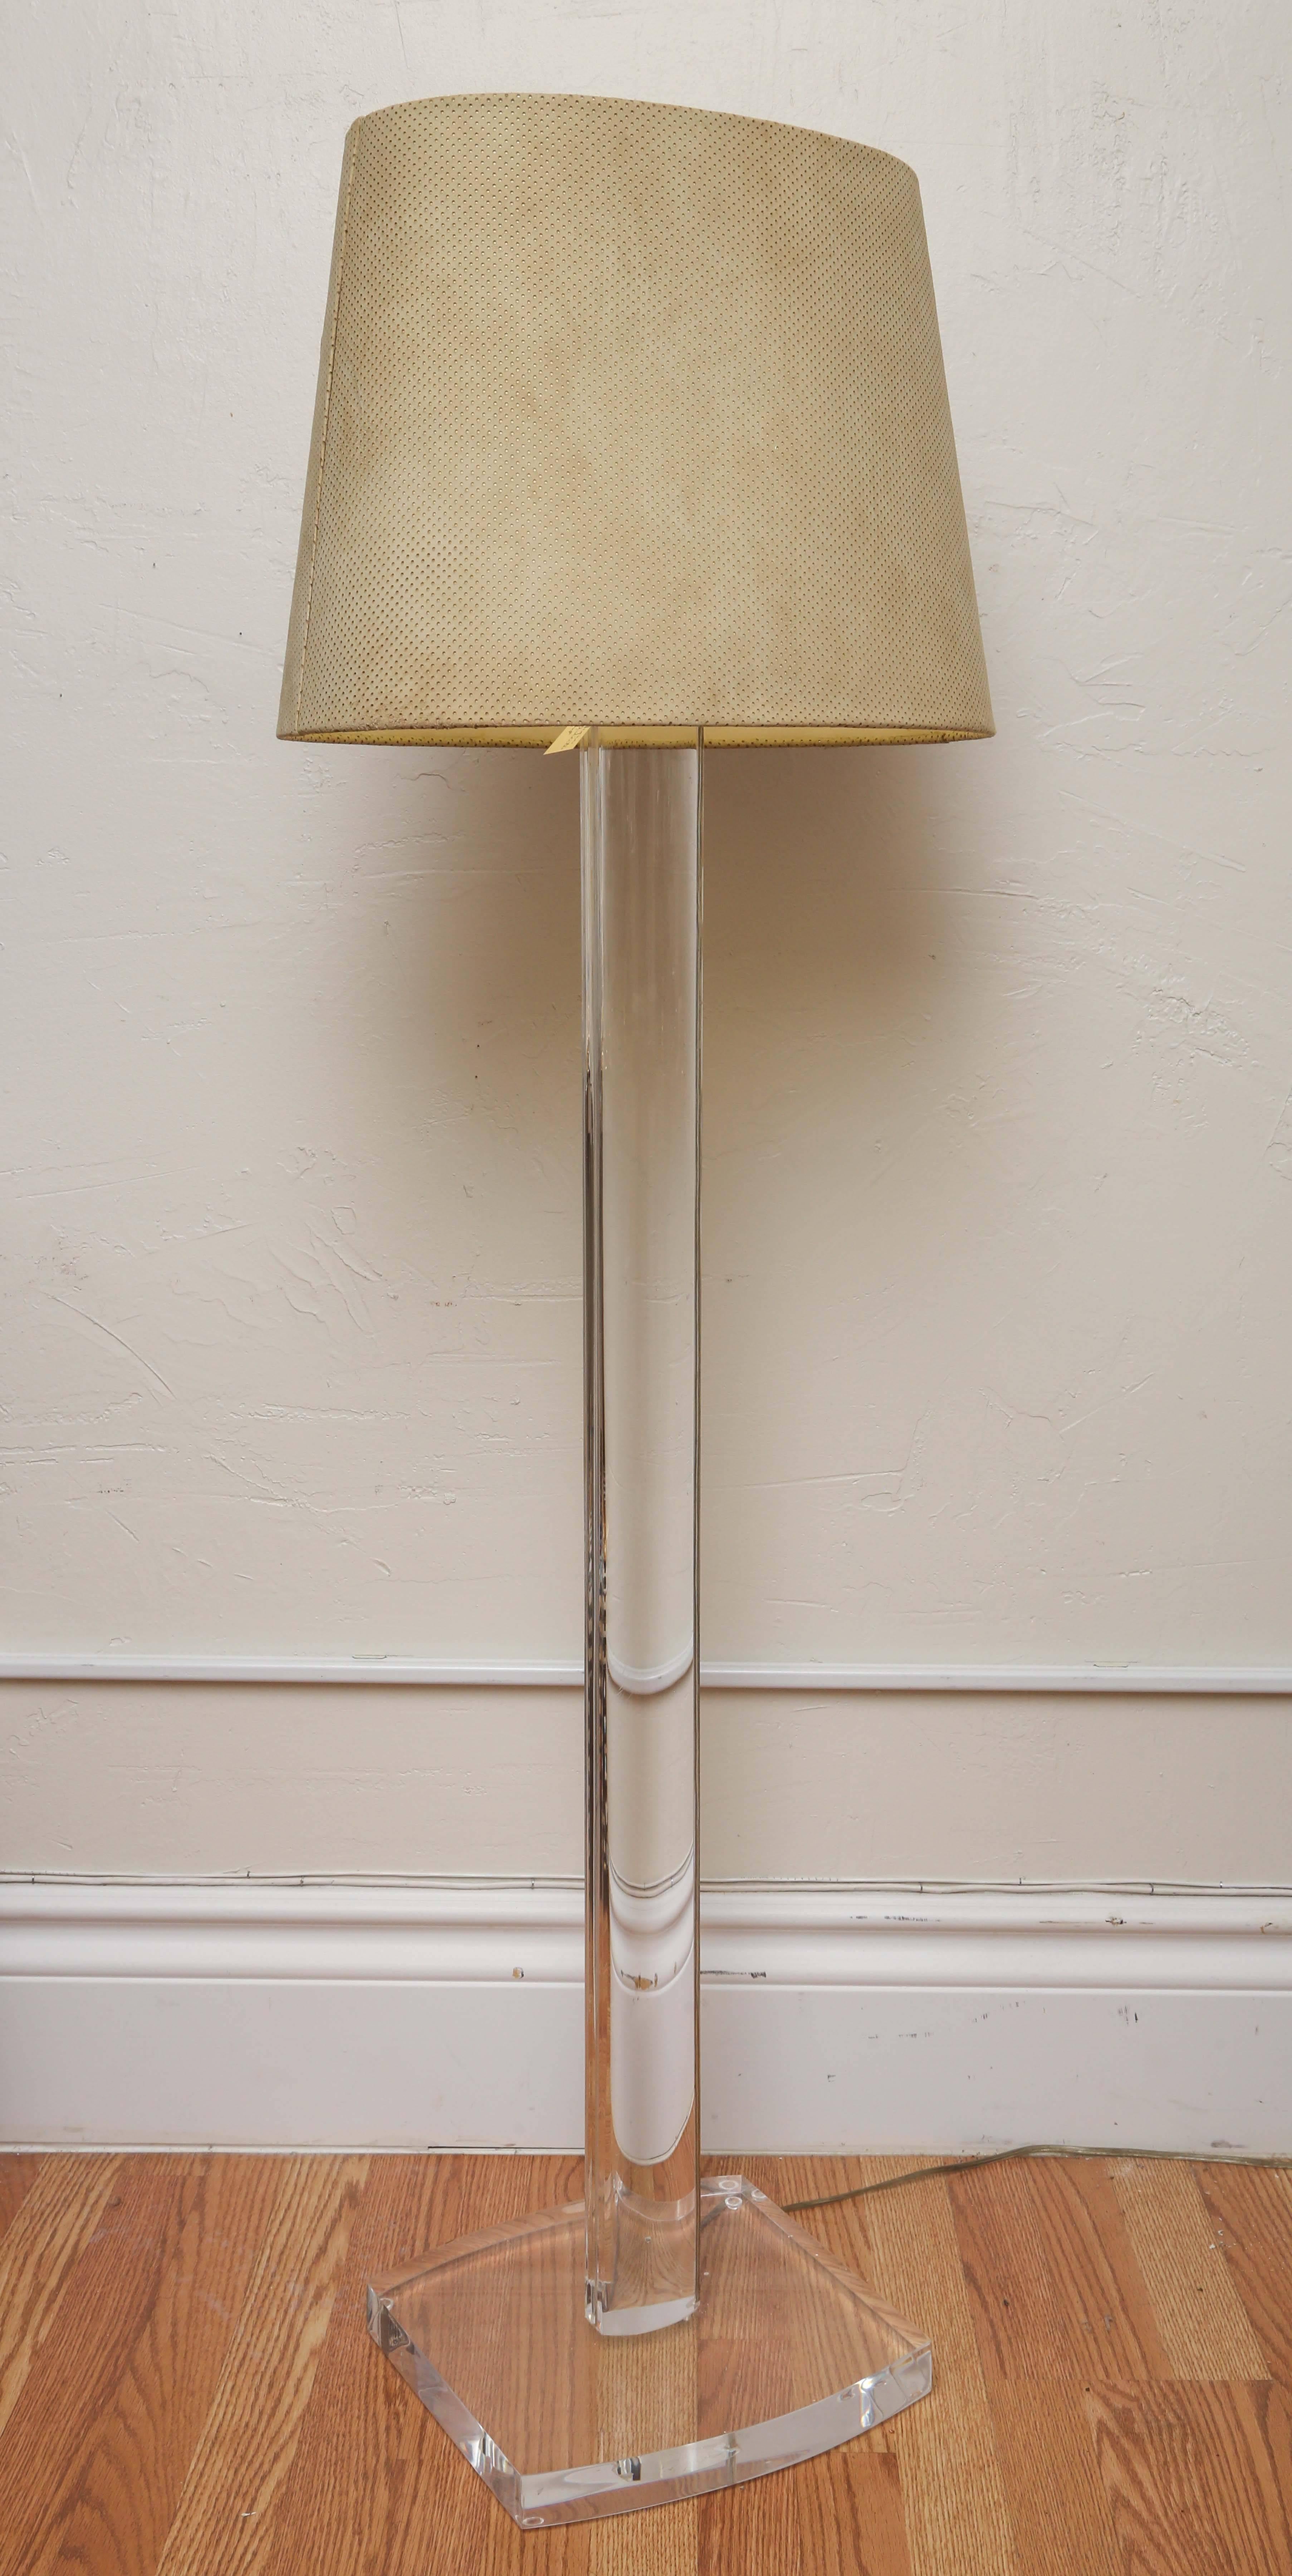 Attractive Lucite floor lamp with original pierced suede shade.